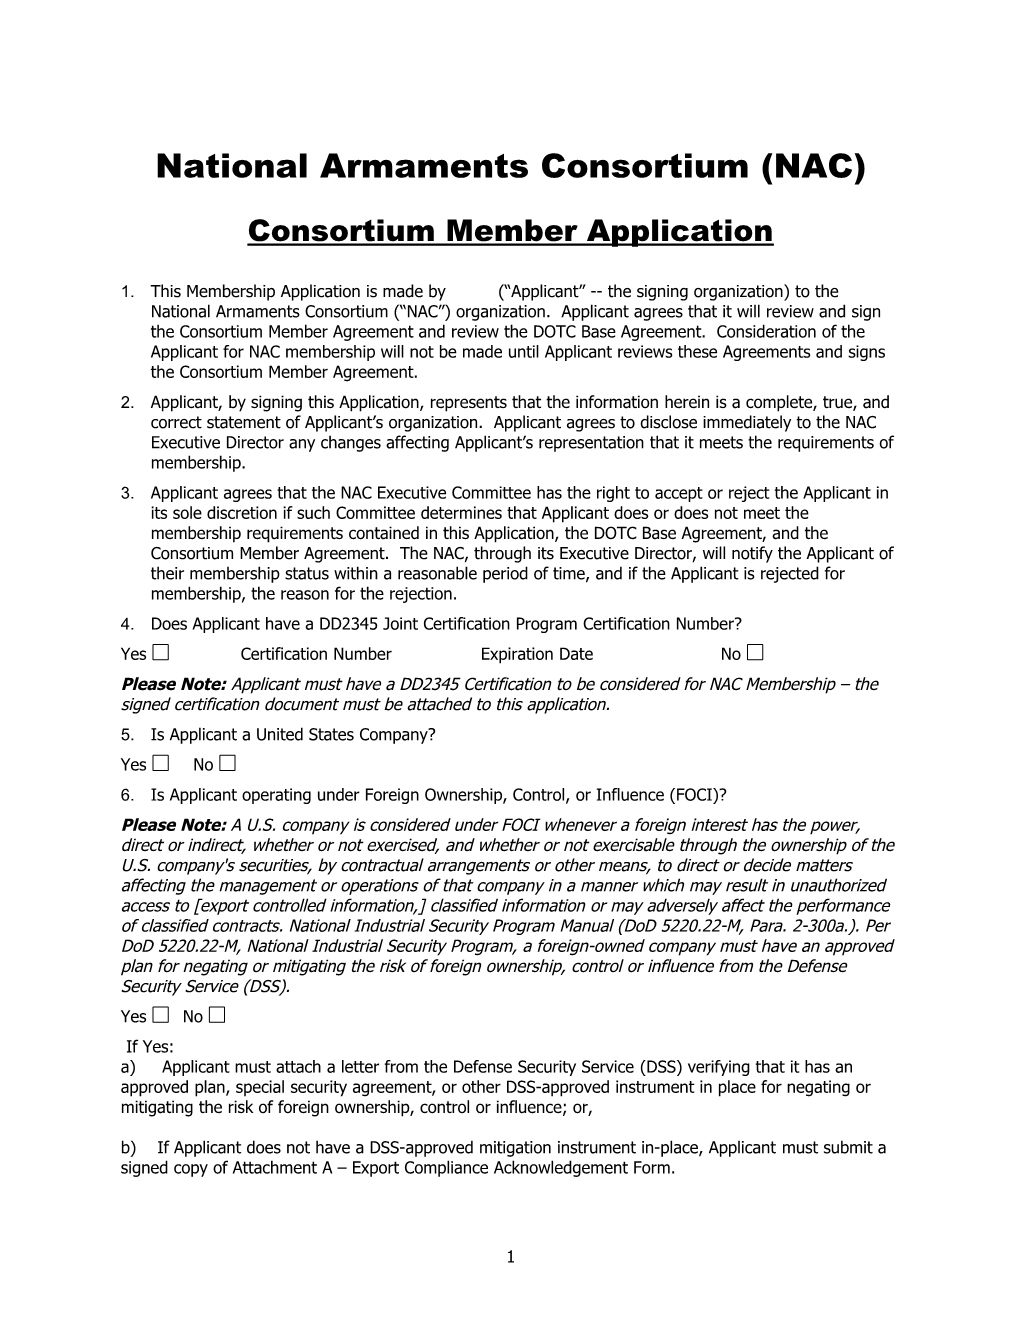 National Armaments Consortium(NAC)